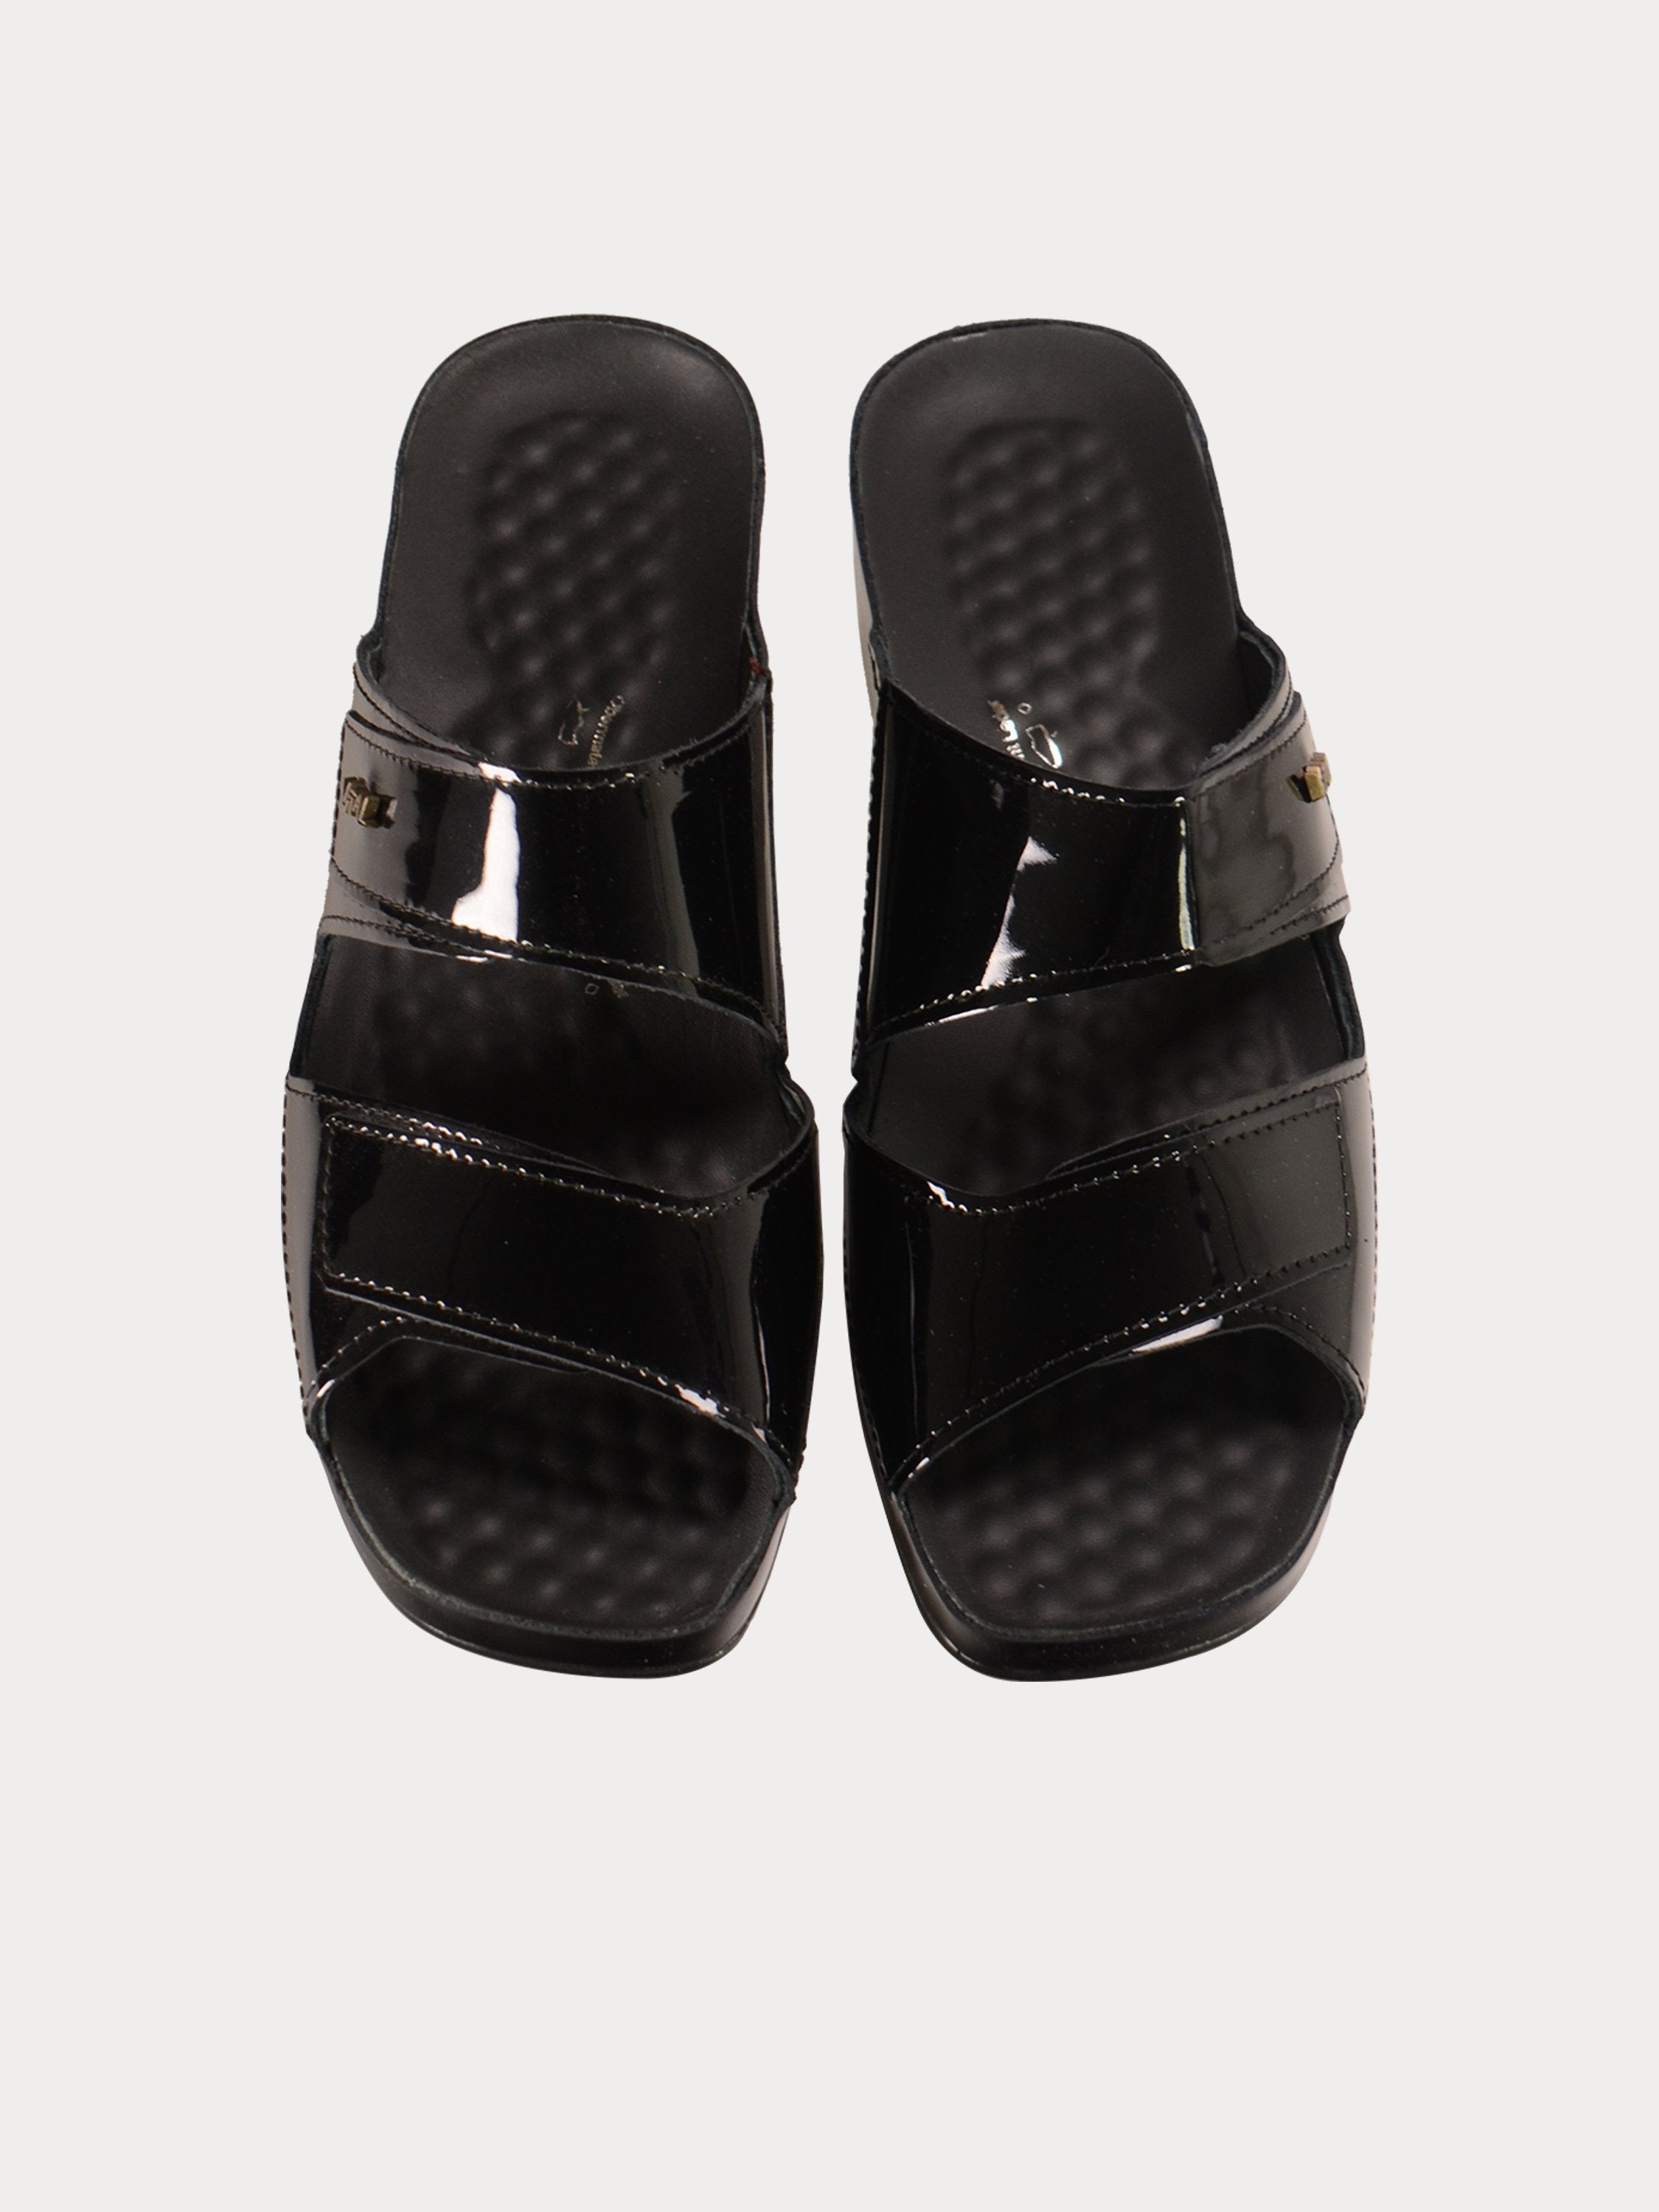 Vital Women's Slider Patent Leather Sandals #color_Black